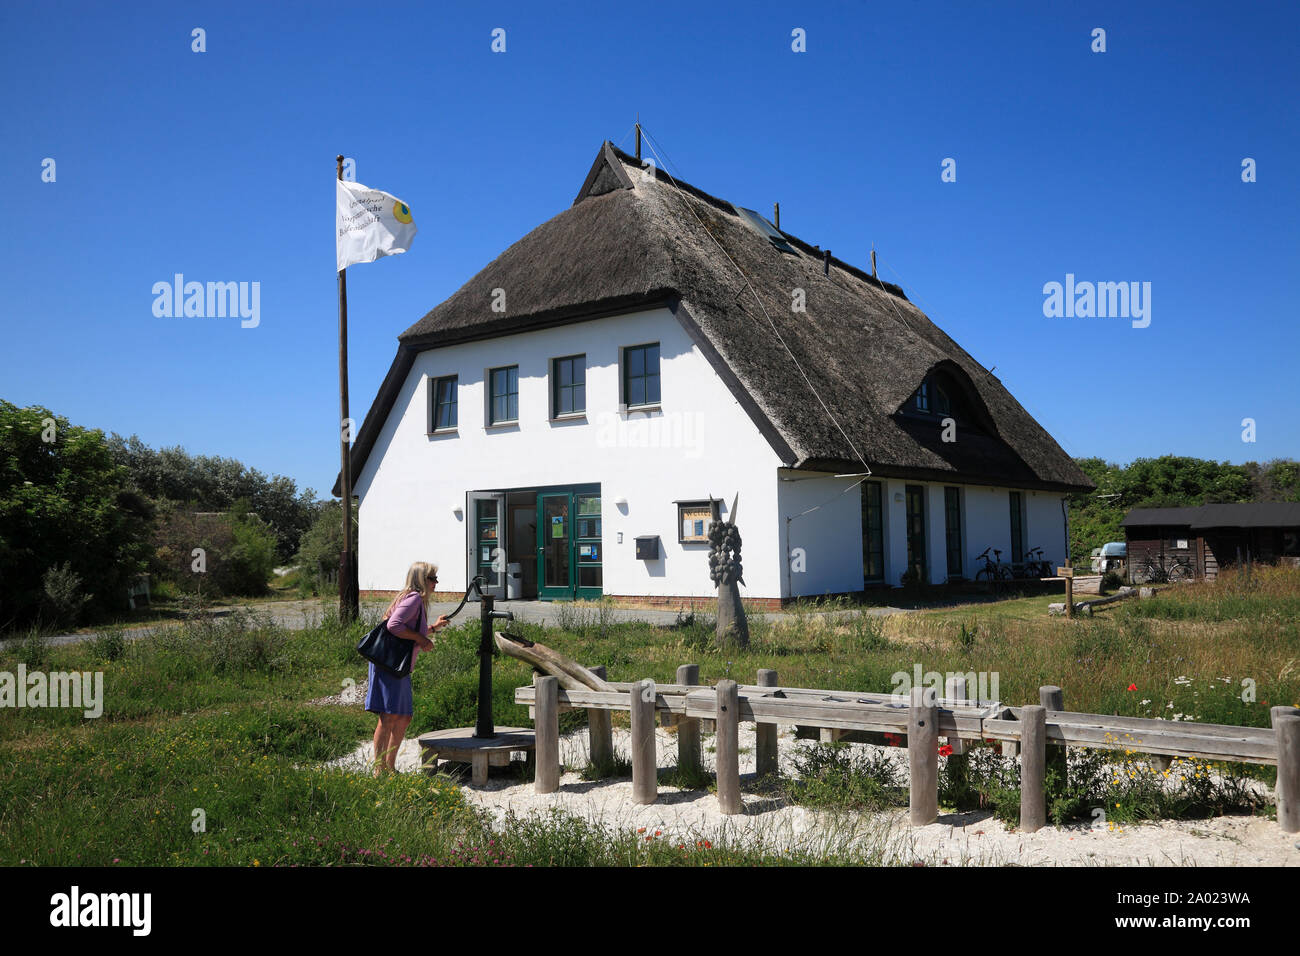 Vitte, parco nazionale house, Hiddensee isola, Mar Baltico, Meclemburgo-Pomerania, Germania, Europa Foto Stock